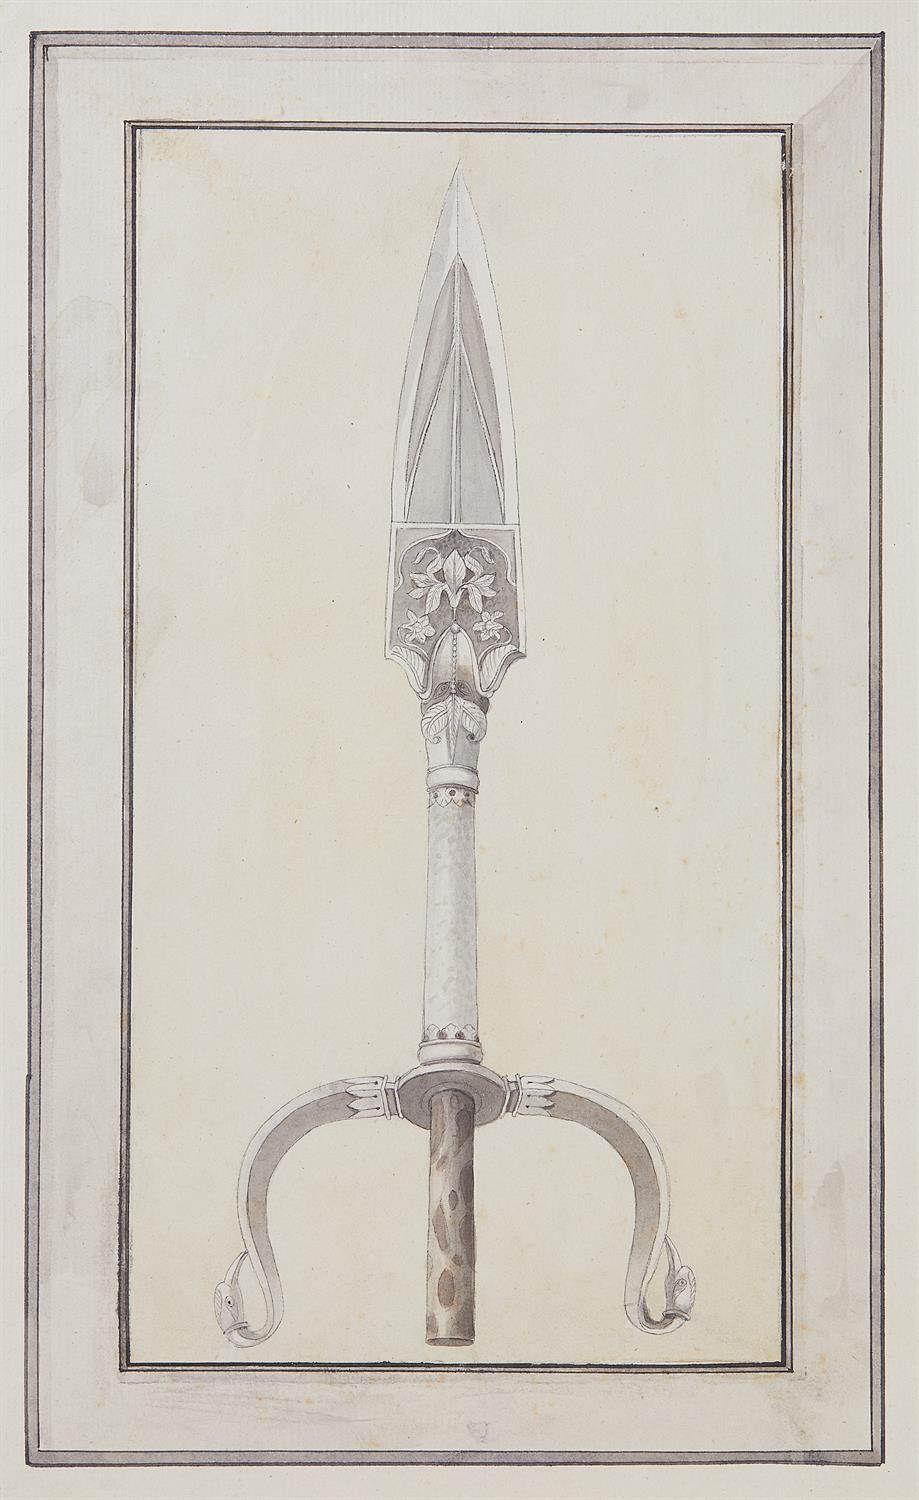 George Landseer, Indian Khanjar and Ballam studies, watercolours on paper [India, c. 1860] - Image 2 of 2